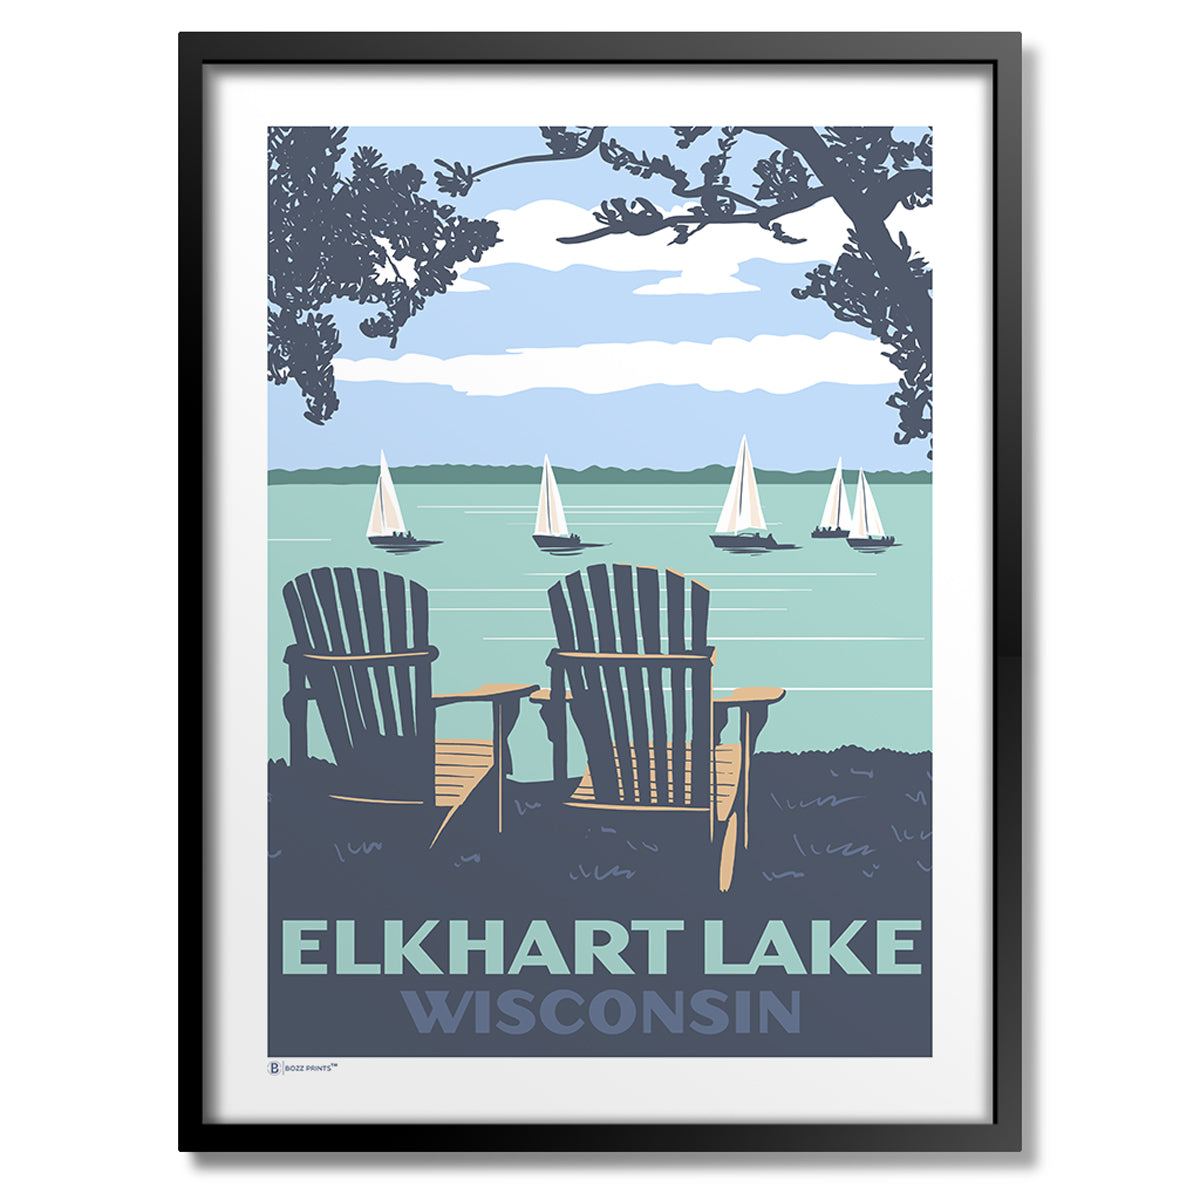 Elkhart Lake Wisconsin Print